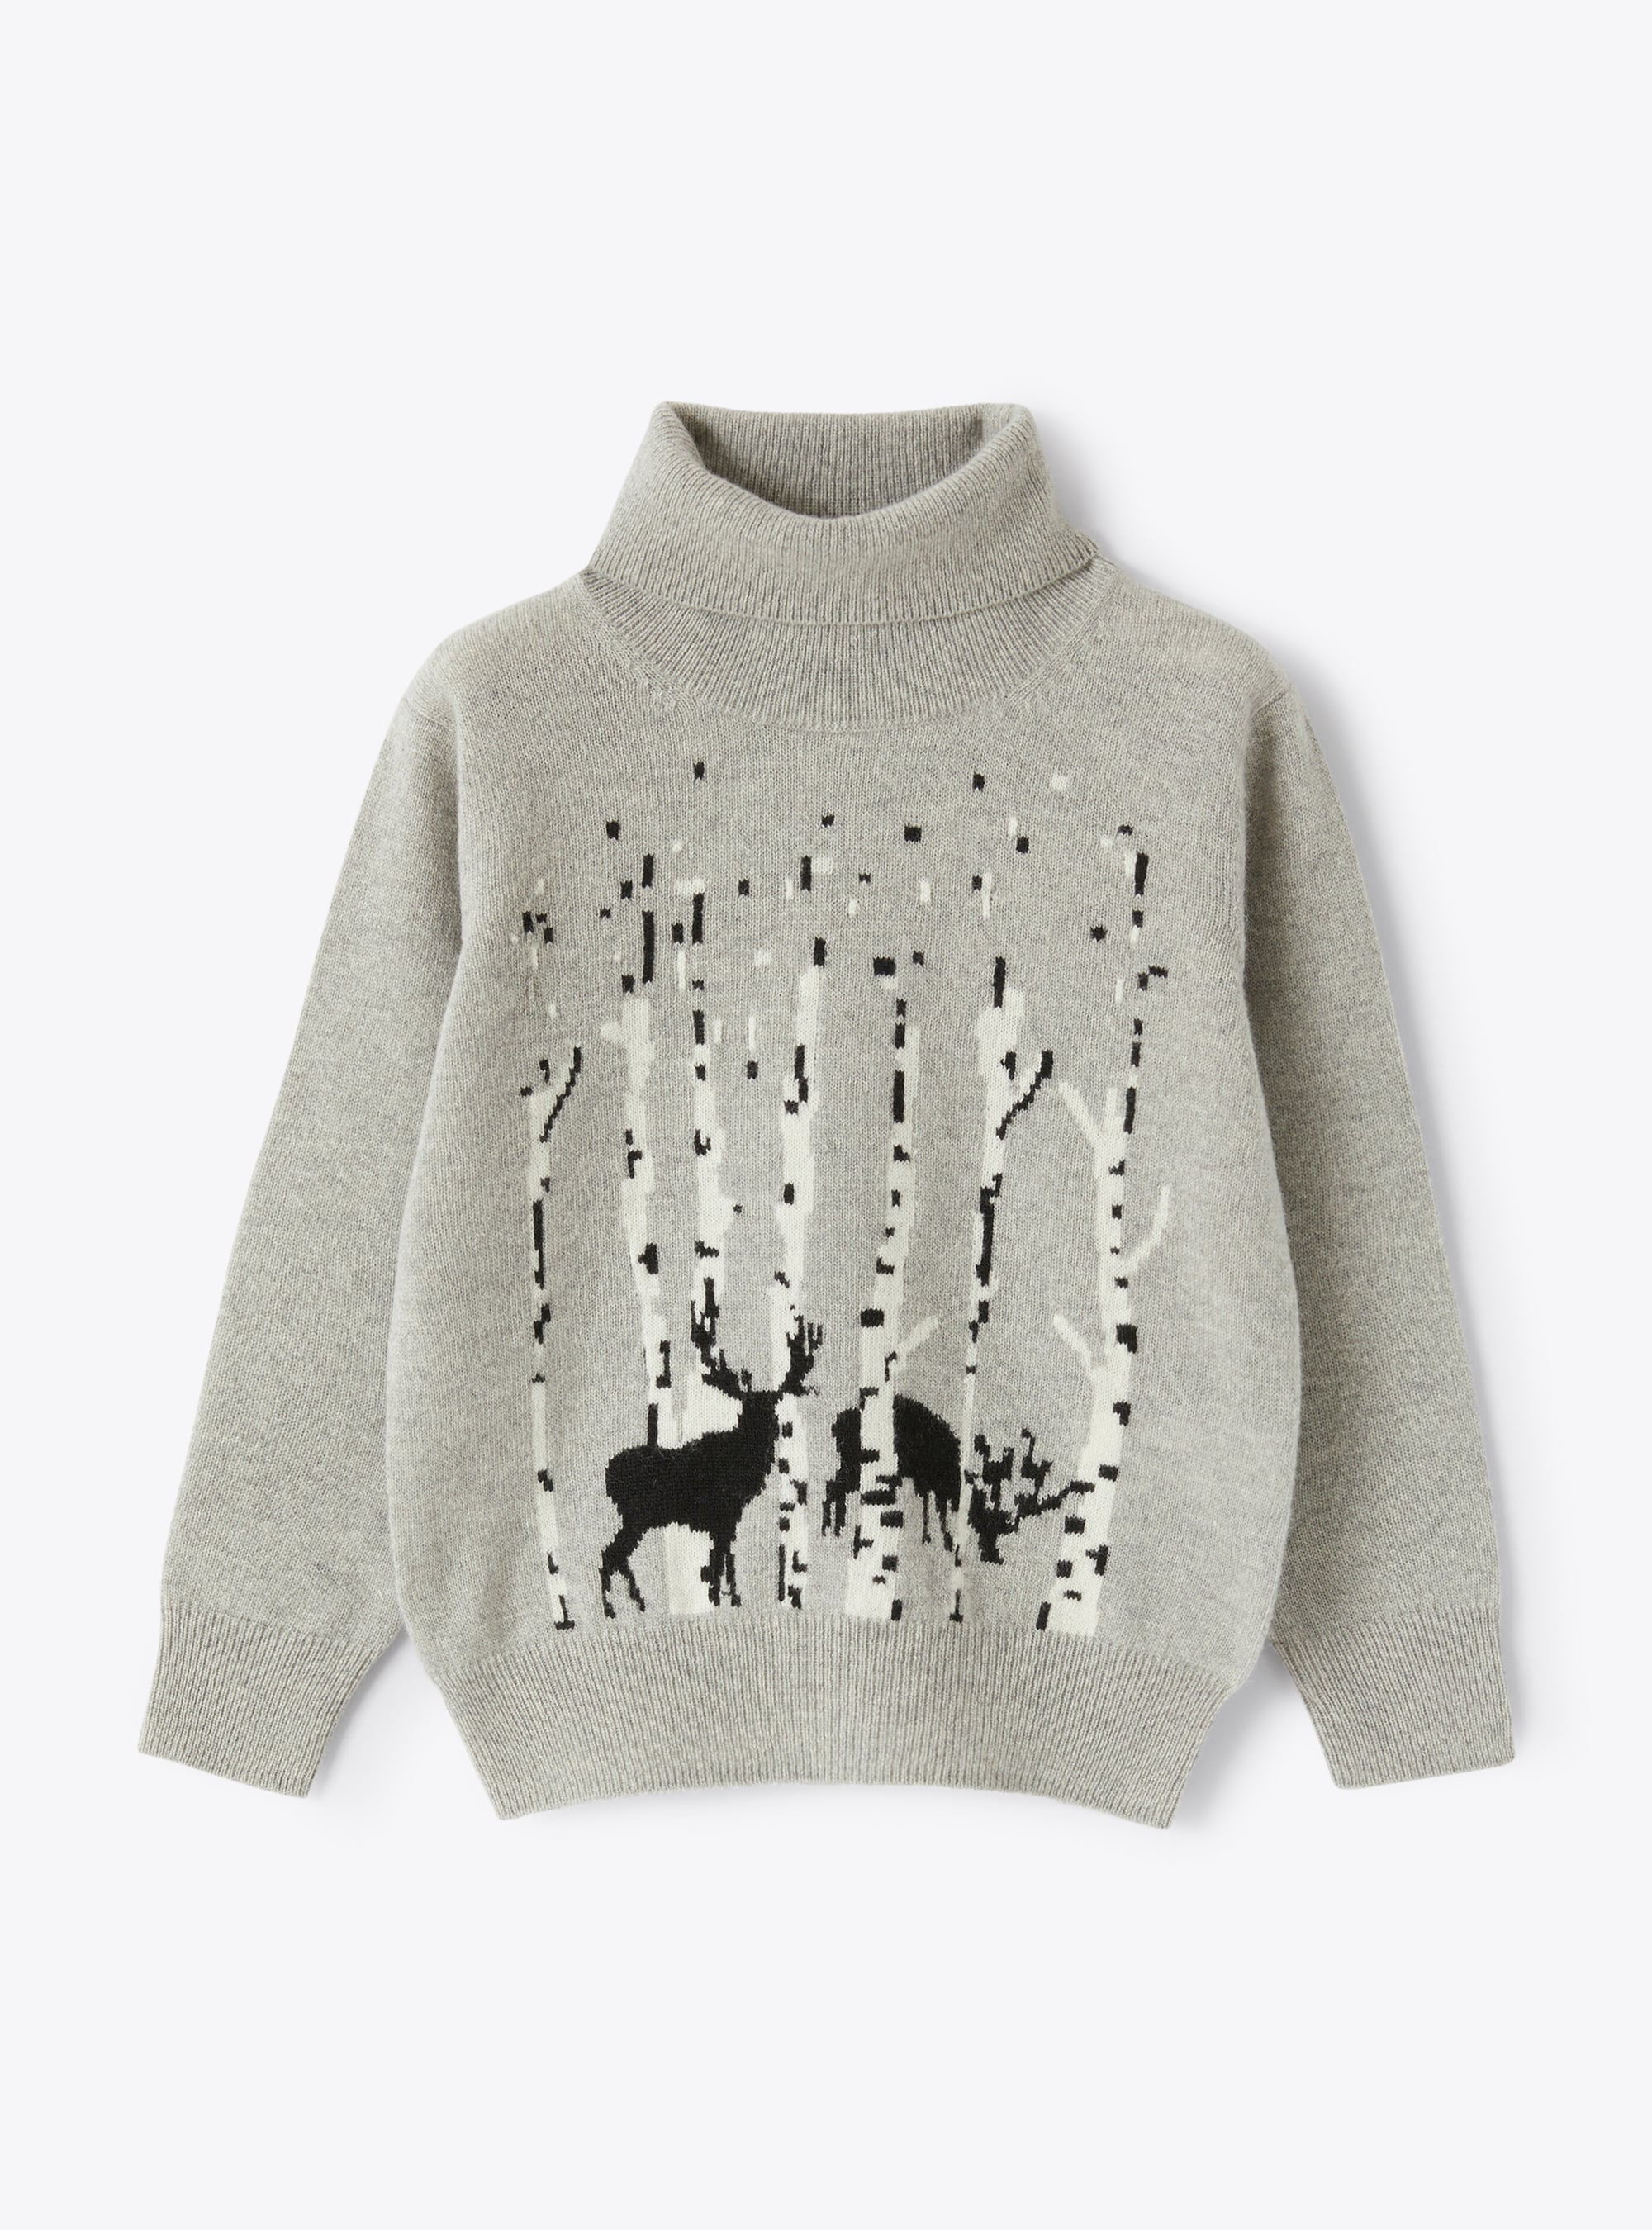 Turtleneck sweater in grey merino wool with inlay detail - Sweaters - Il Gufo